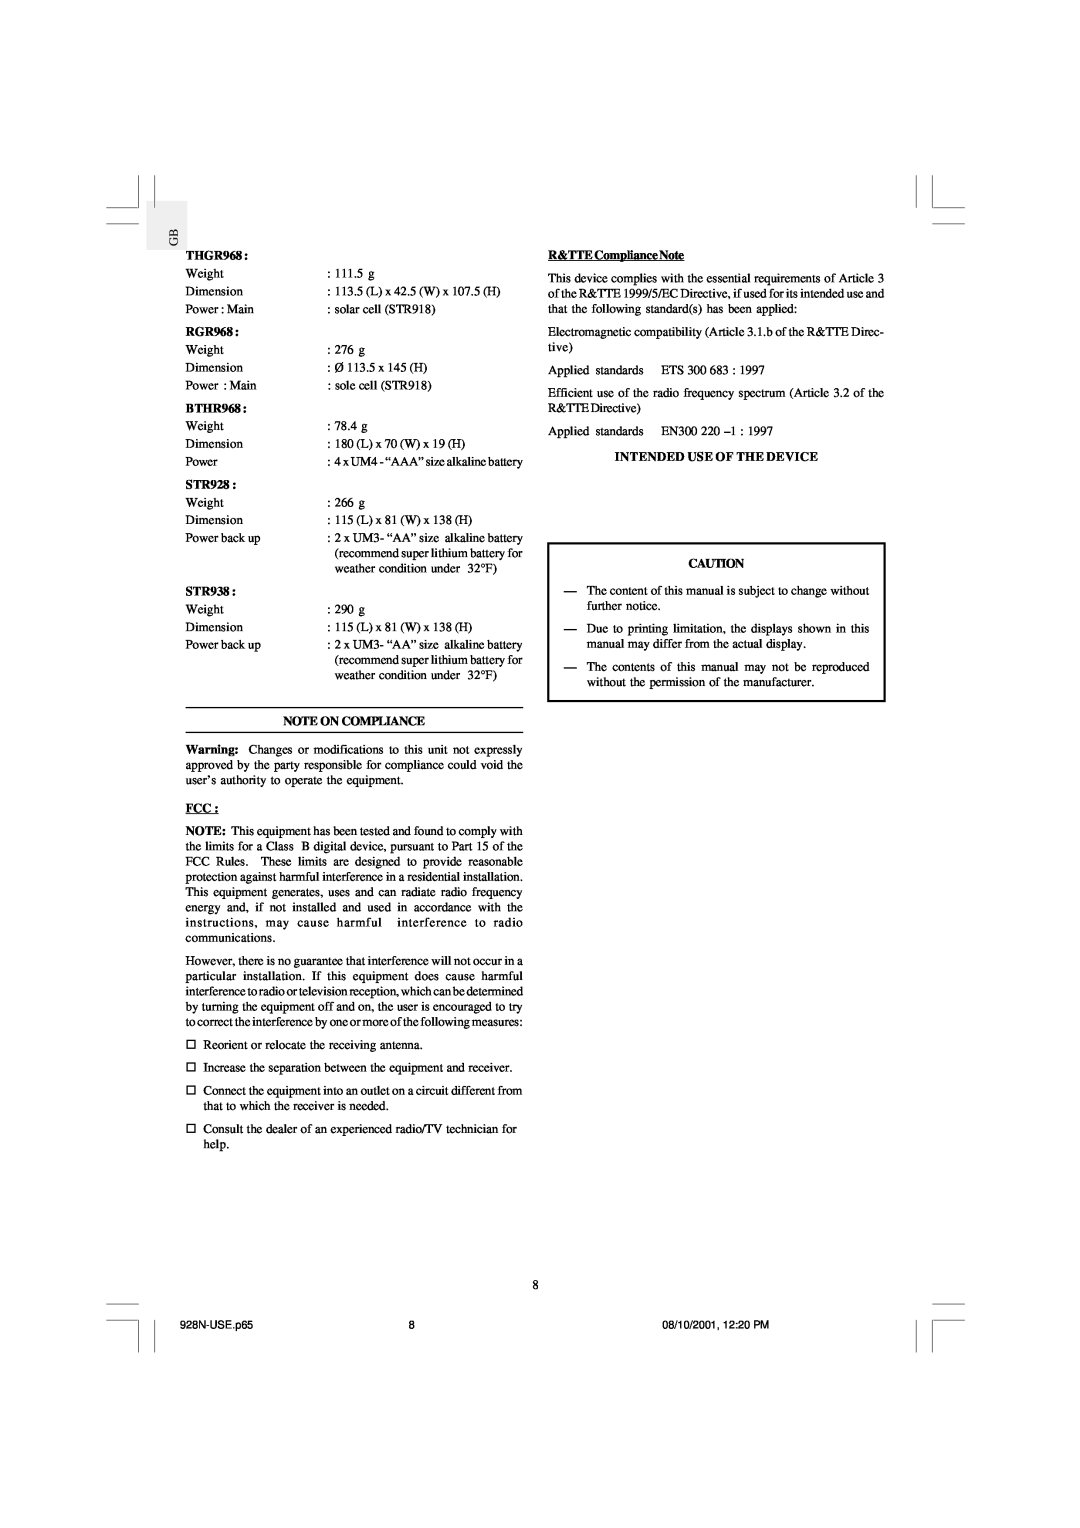 Oregon Scientific WMR968 user manual THGR968, RGR968, BTHR968, STR928, STR938, Note On Compliance, R&TTE Compliance Note 